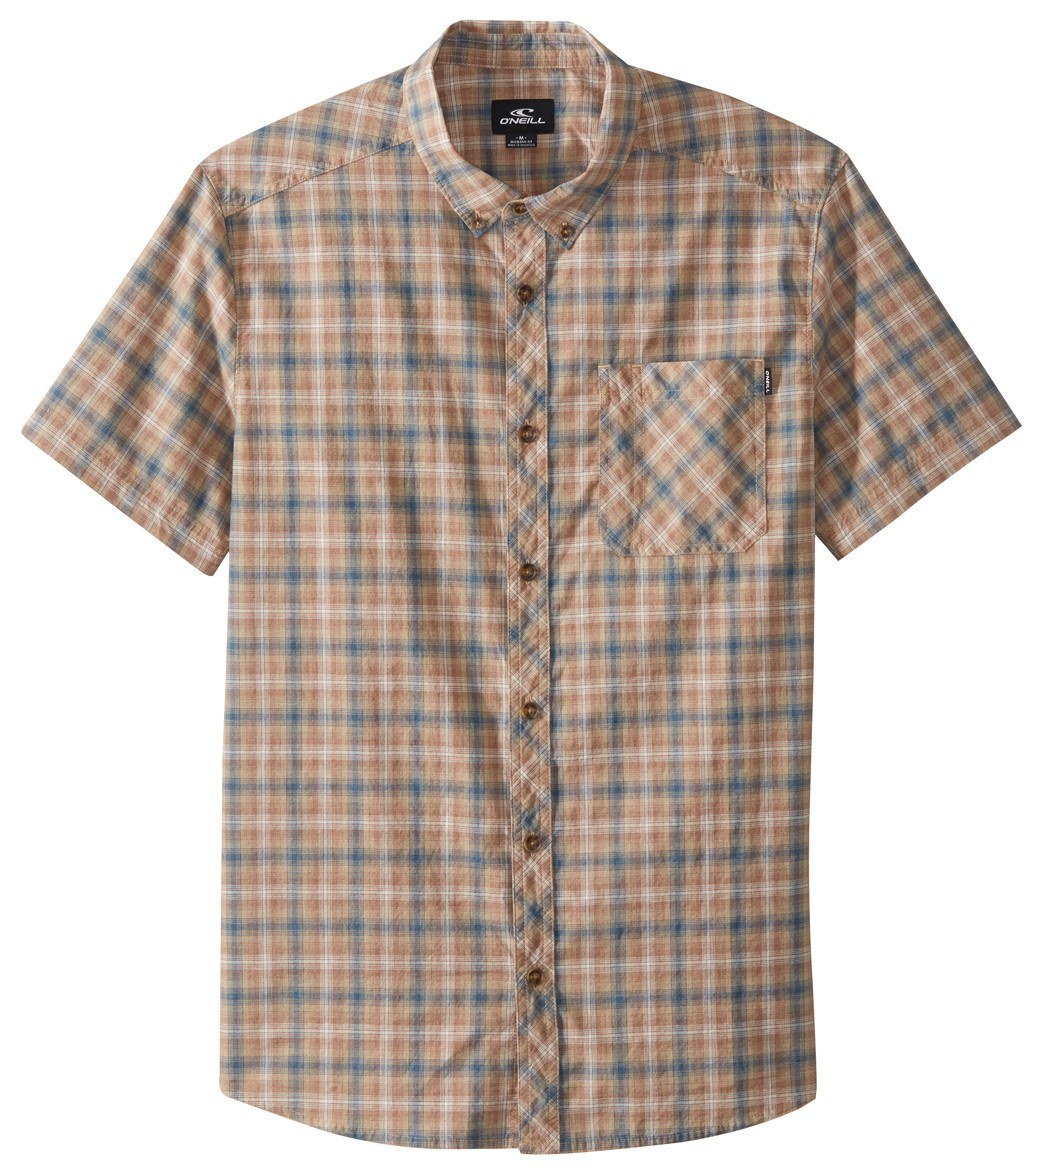 O'neill Men's Fitz Shirt - Khaki Xl Cotton - Swimoutlet.com